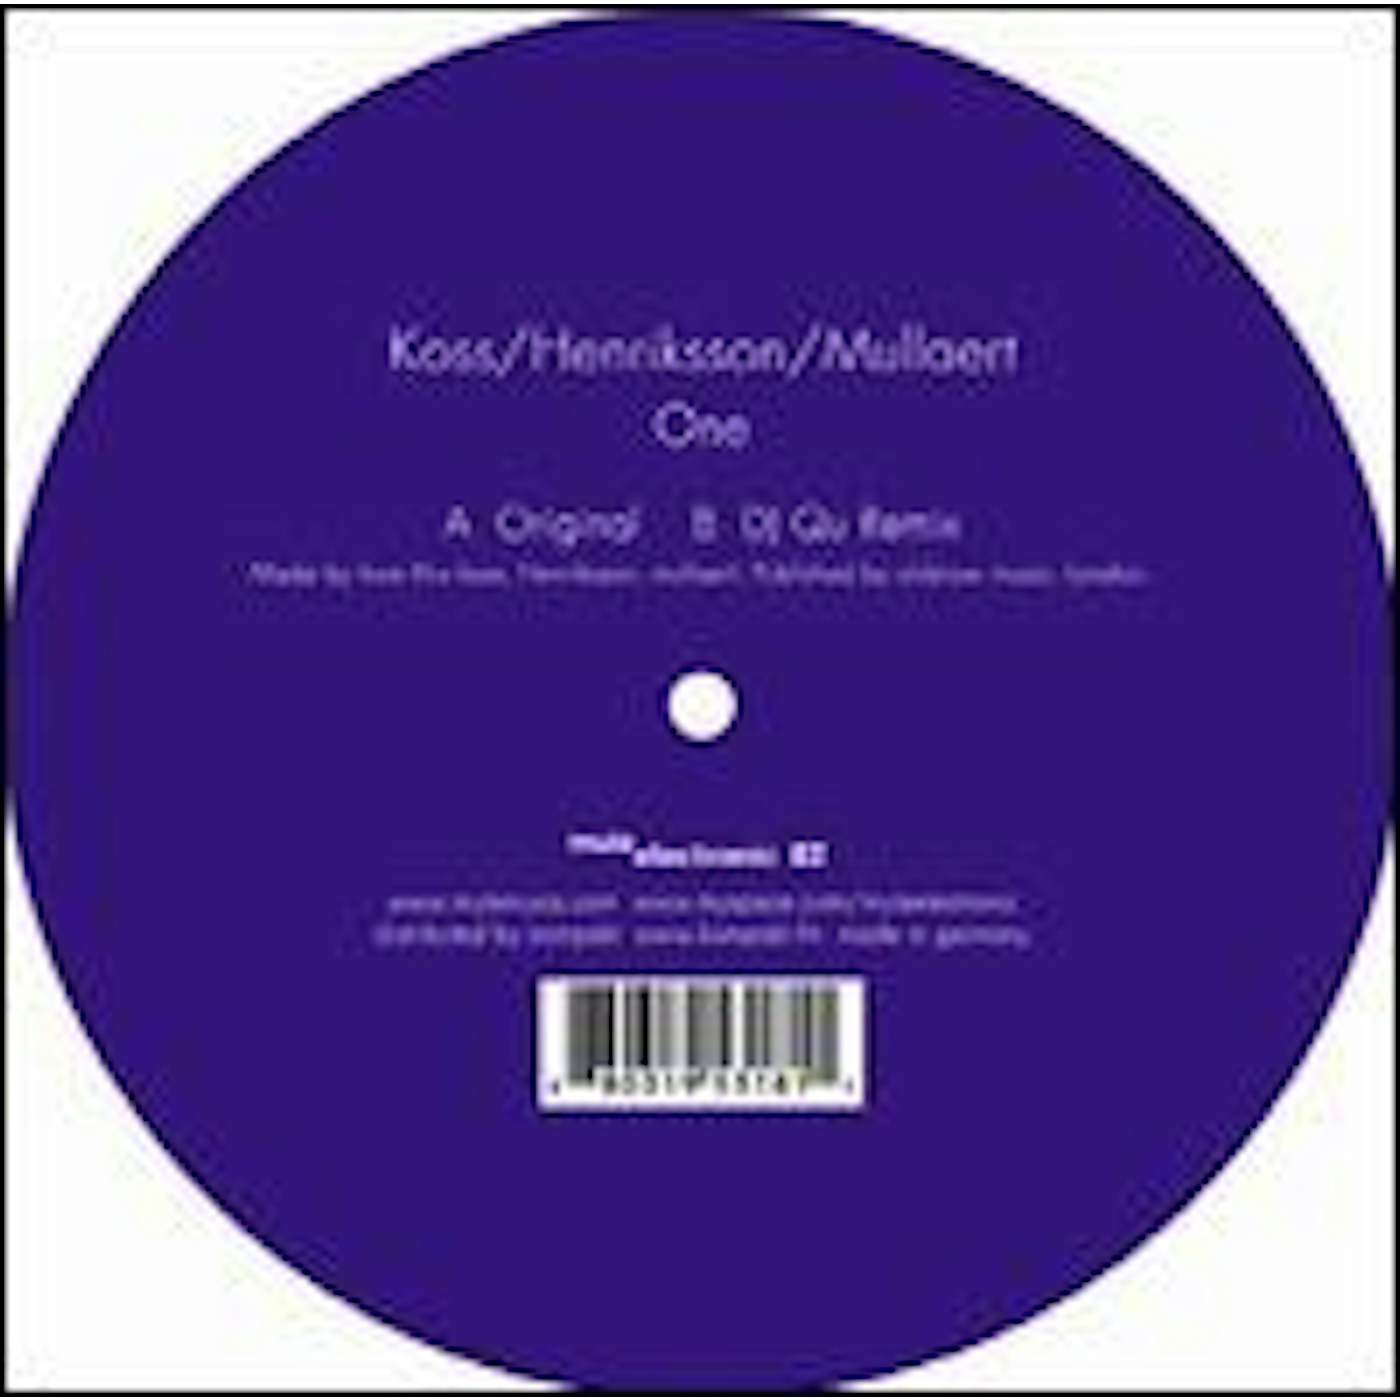 Koss / Henriksson / Mullaert ONE Vinyl Record